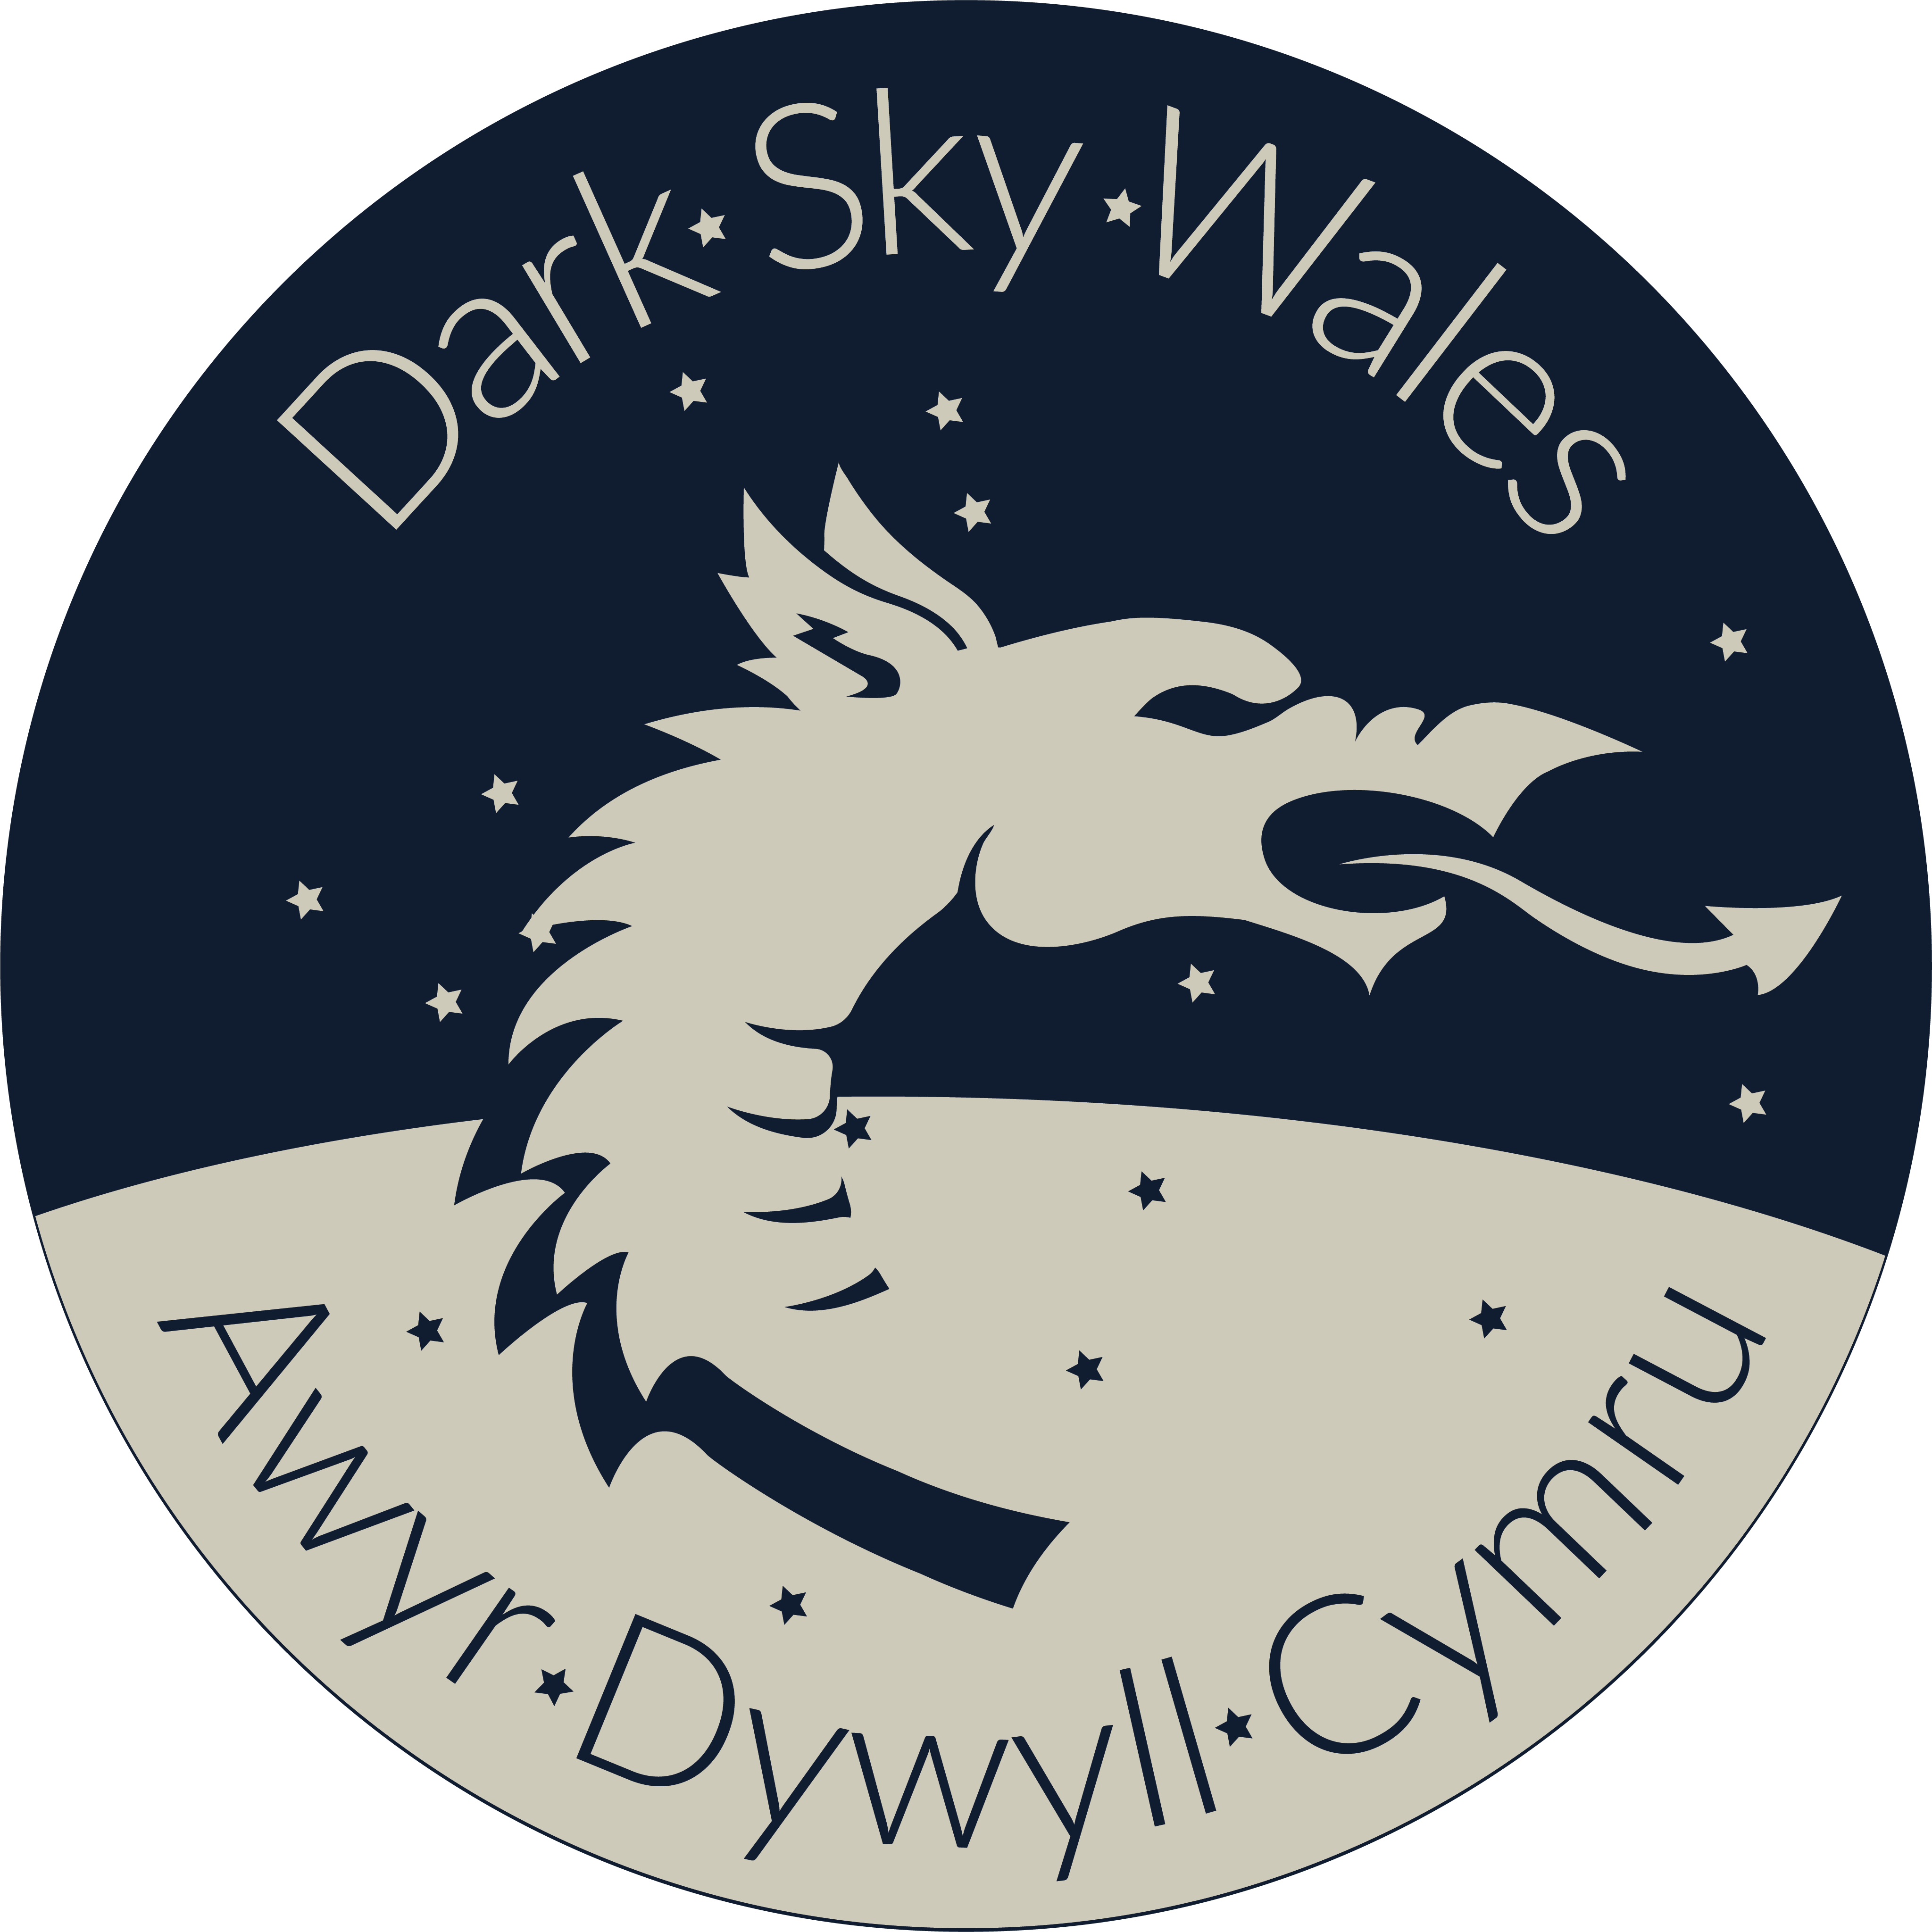 Dark Sky Wales